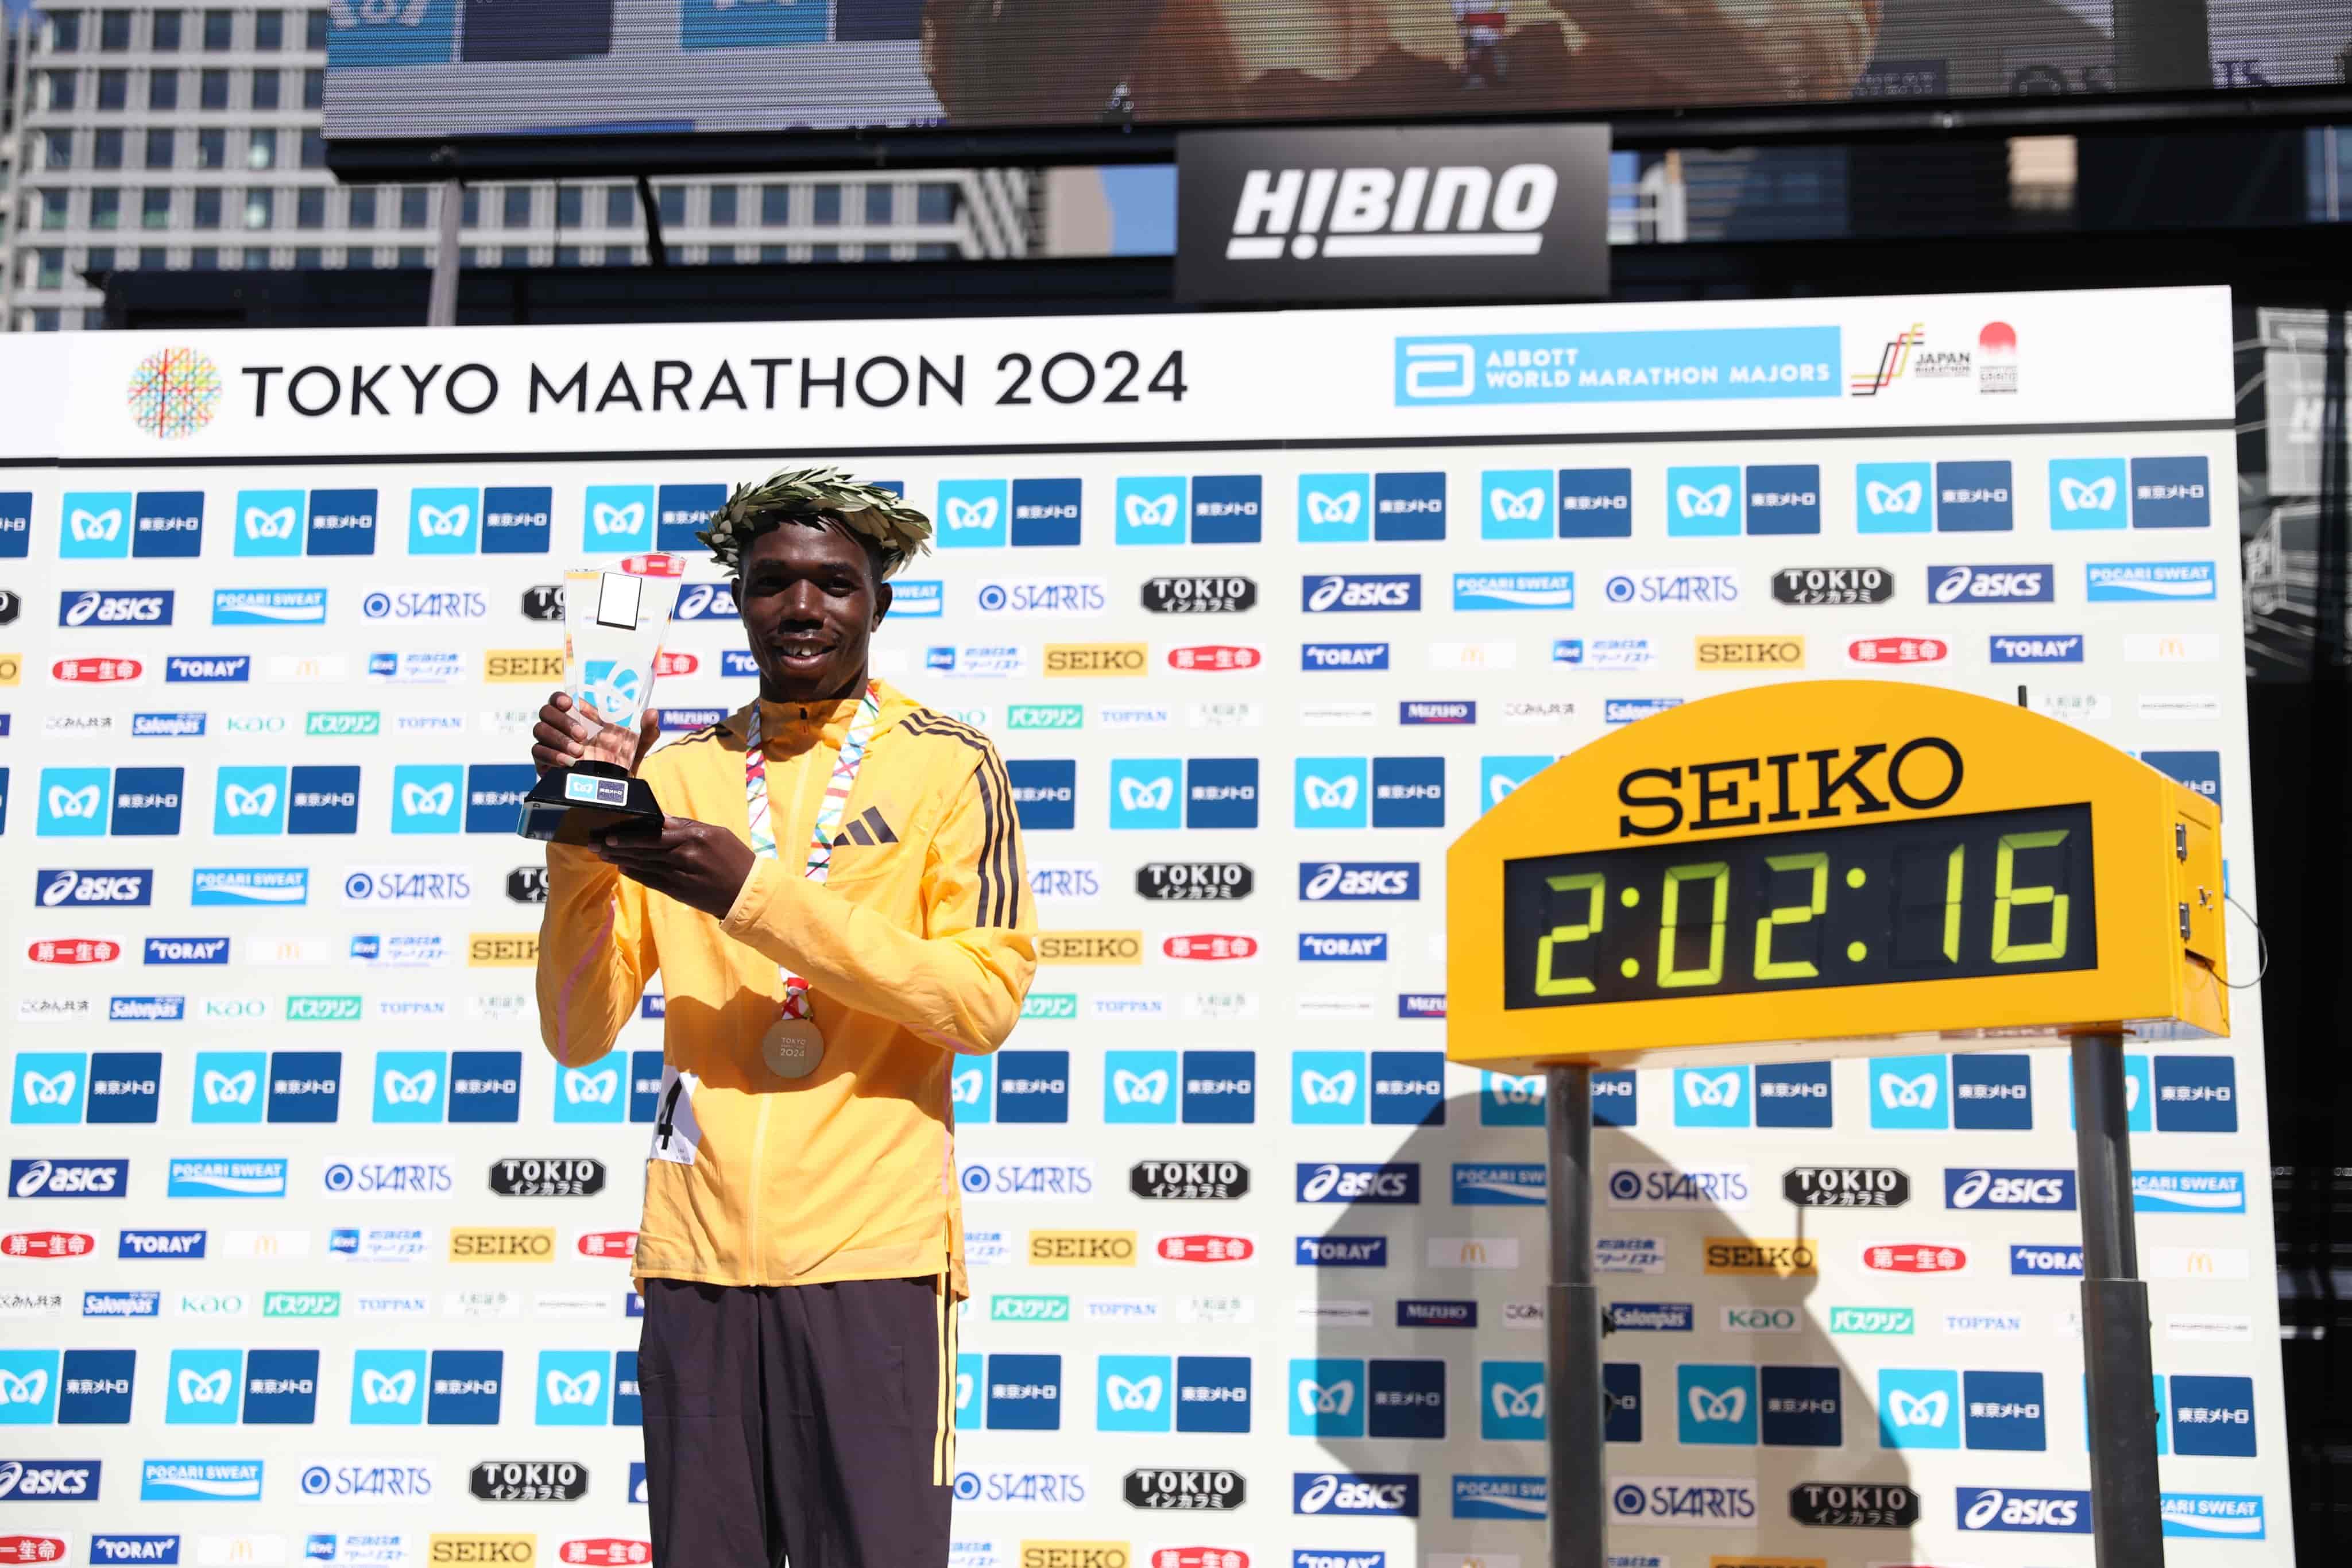 Kipruto breaks Tokyo Marathon record as Kipchoge endures career-worst finish